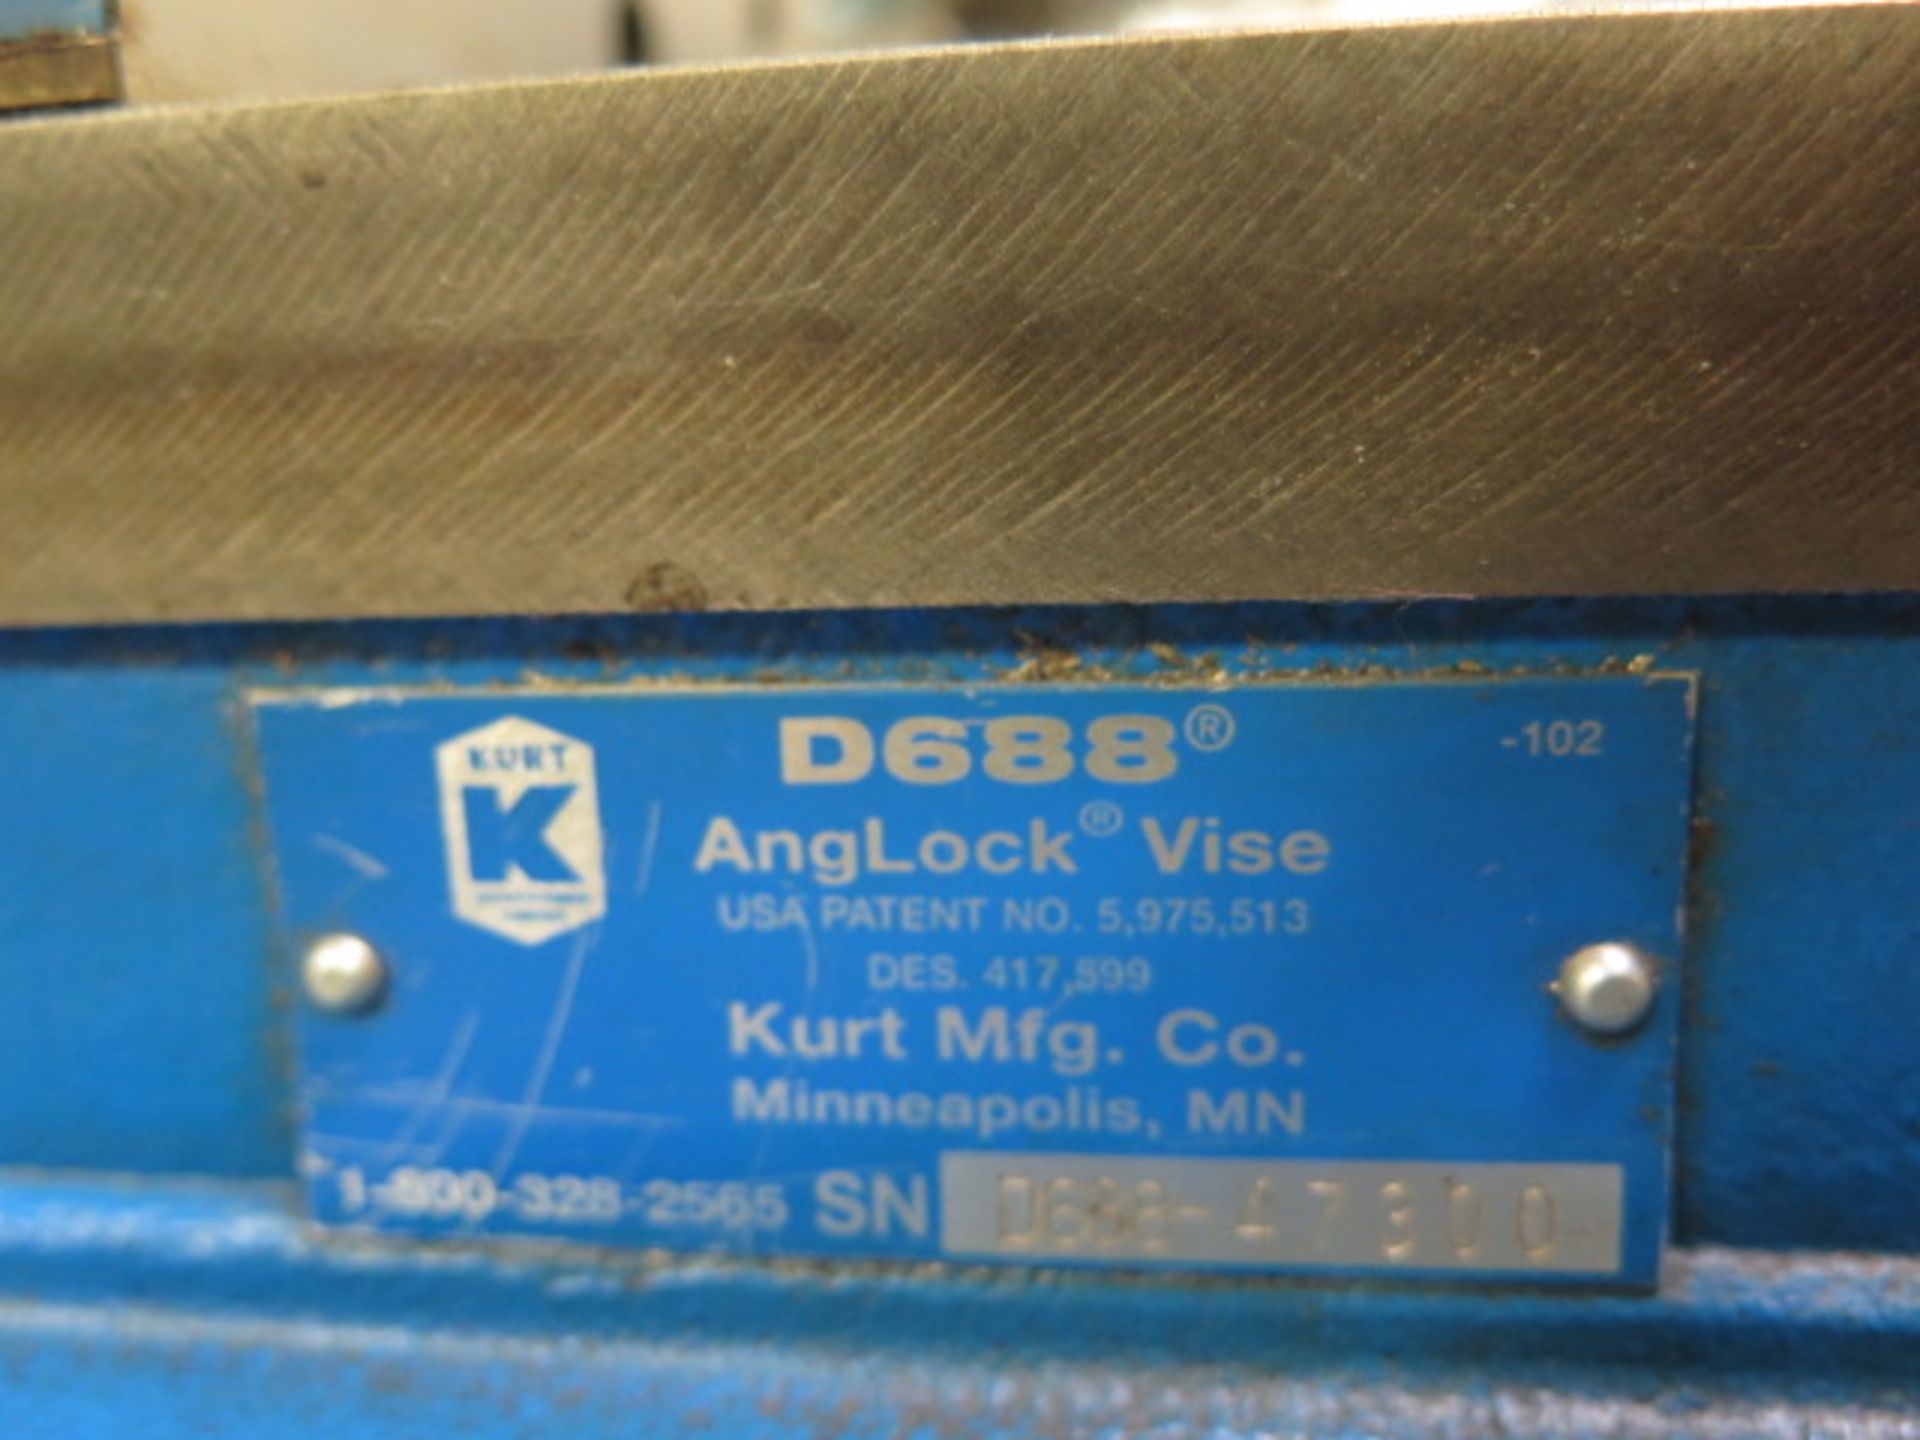 Kurt D688 6" Angle-Lock Vise w/ Swivel Base - Image 2 of 2